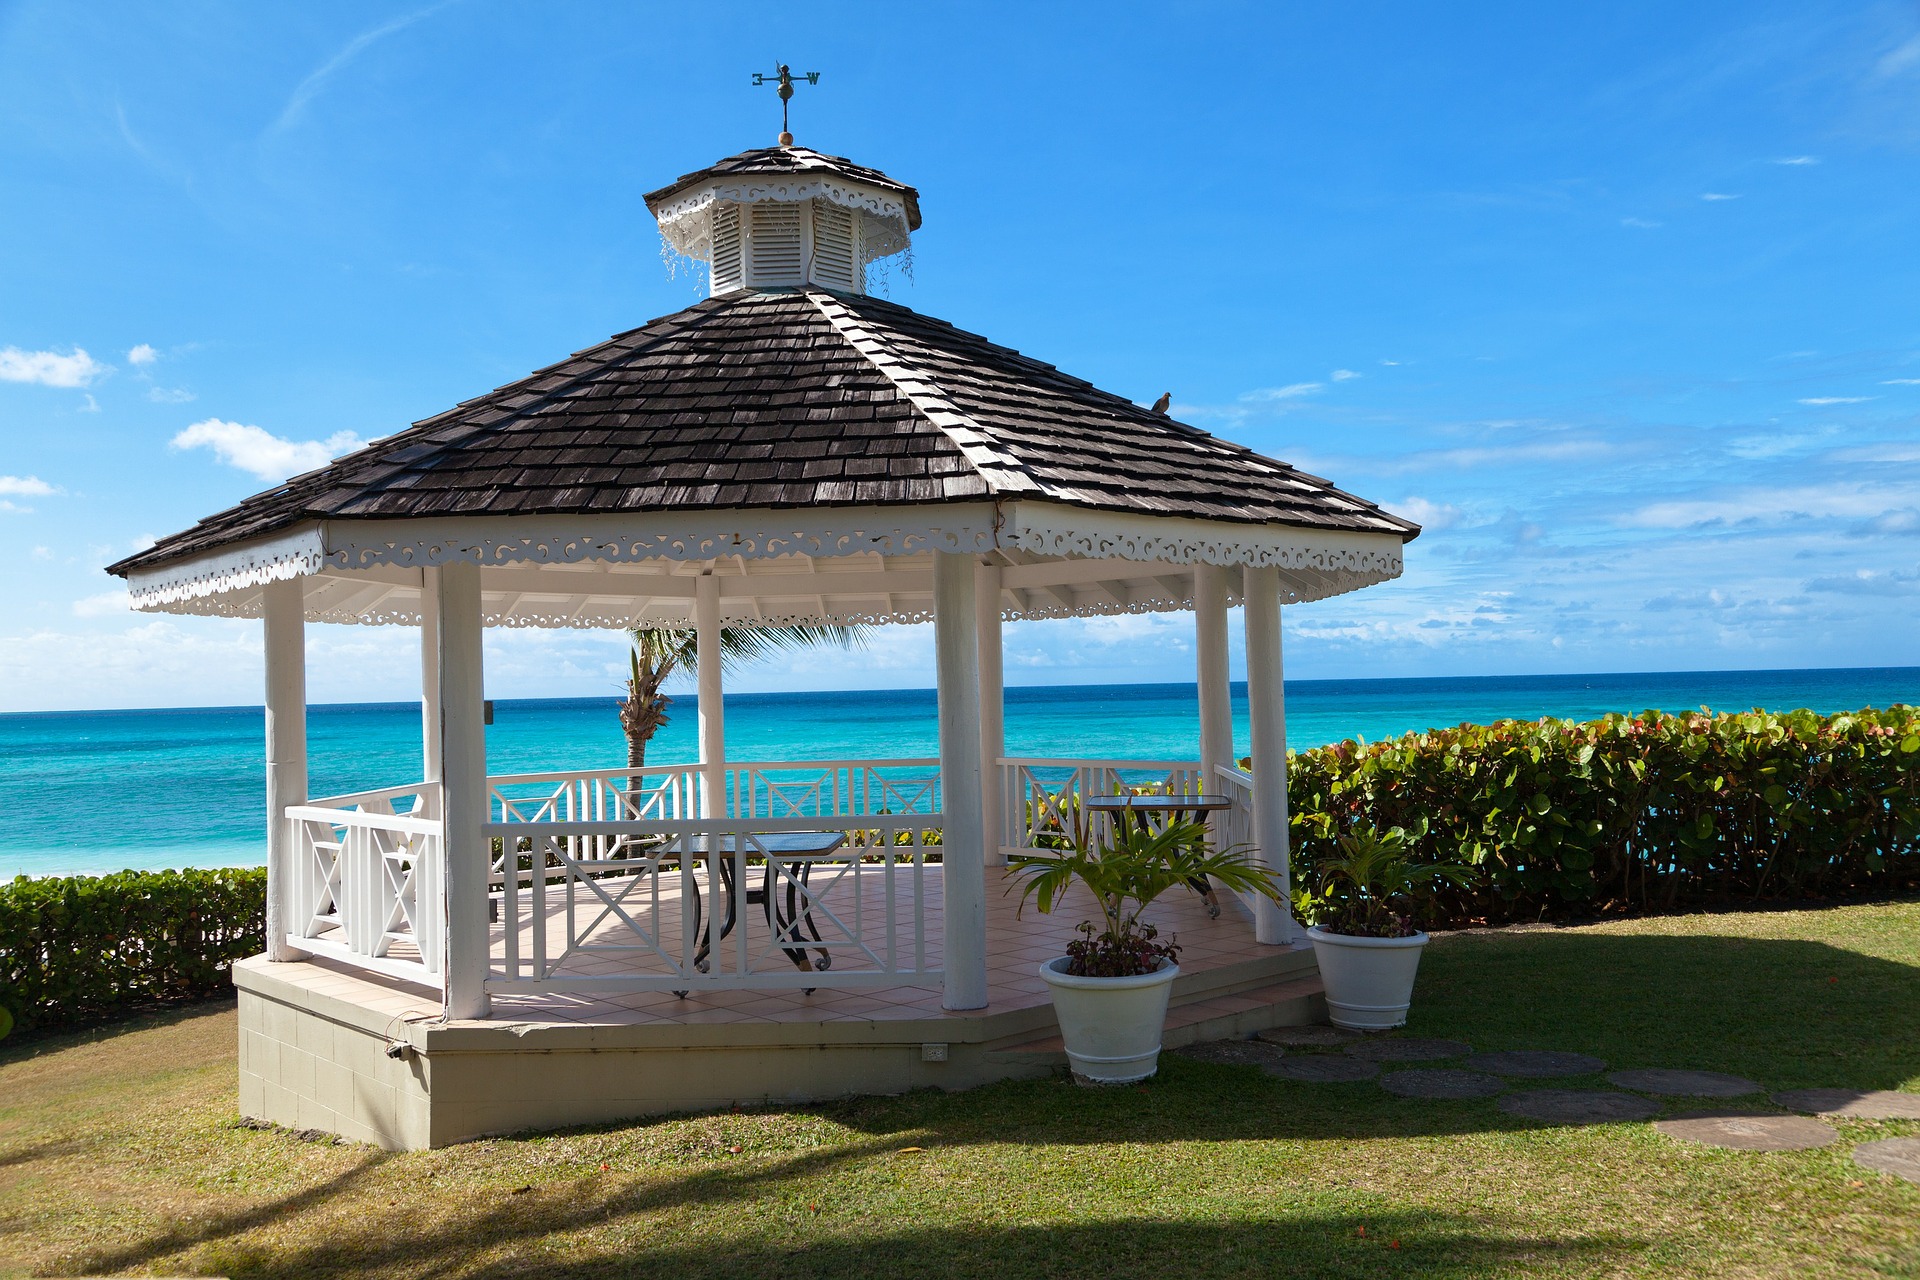 Les 5 principales destinations de mariage dans les Caraïbes